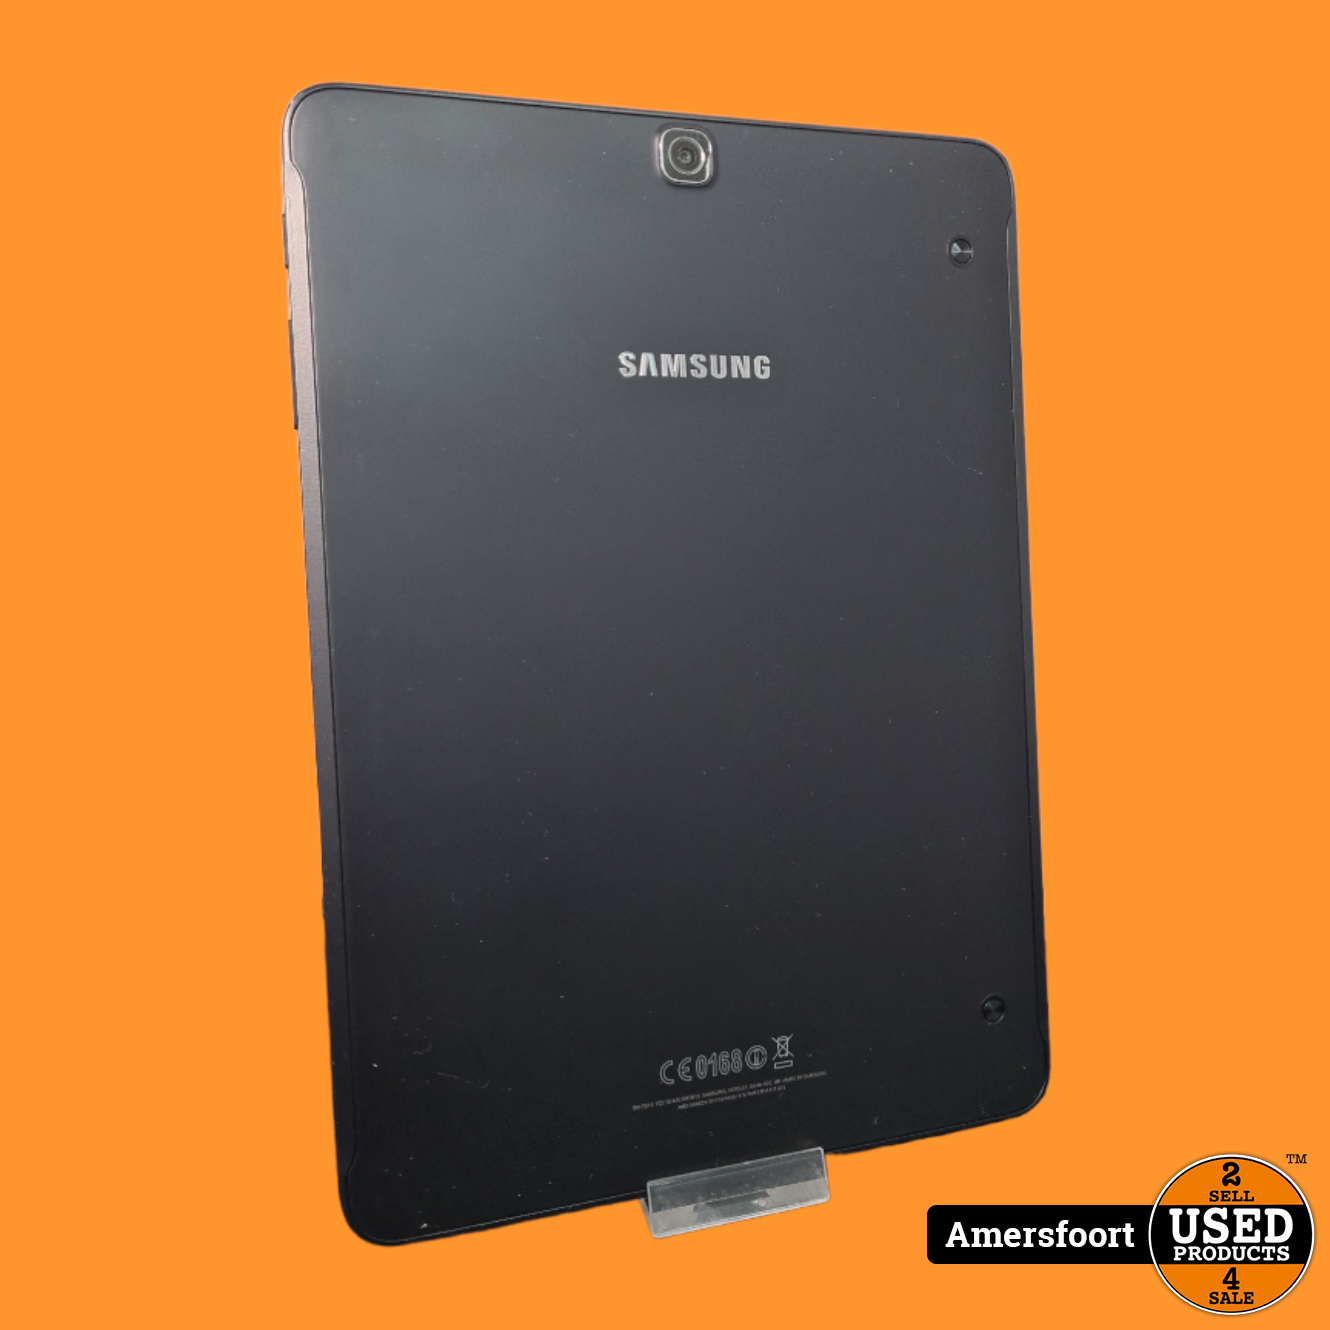 grijs vandaag emotioneel Samsung Galaxy Tab S2 32GB 4G Zwart - Used Products Amersfoort